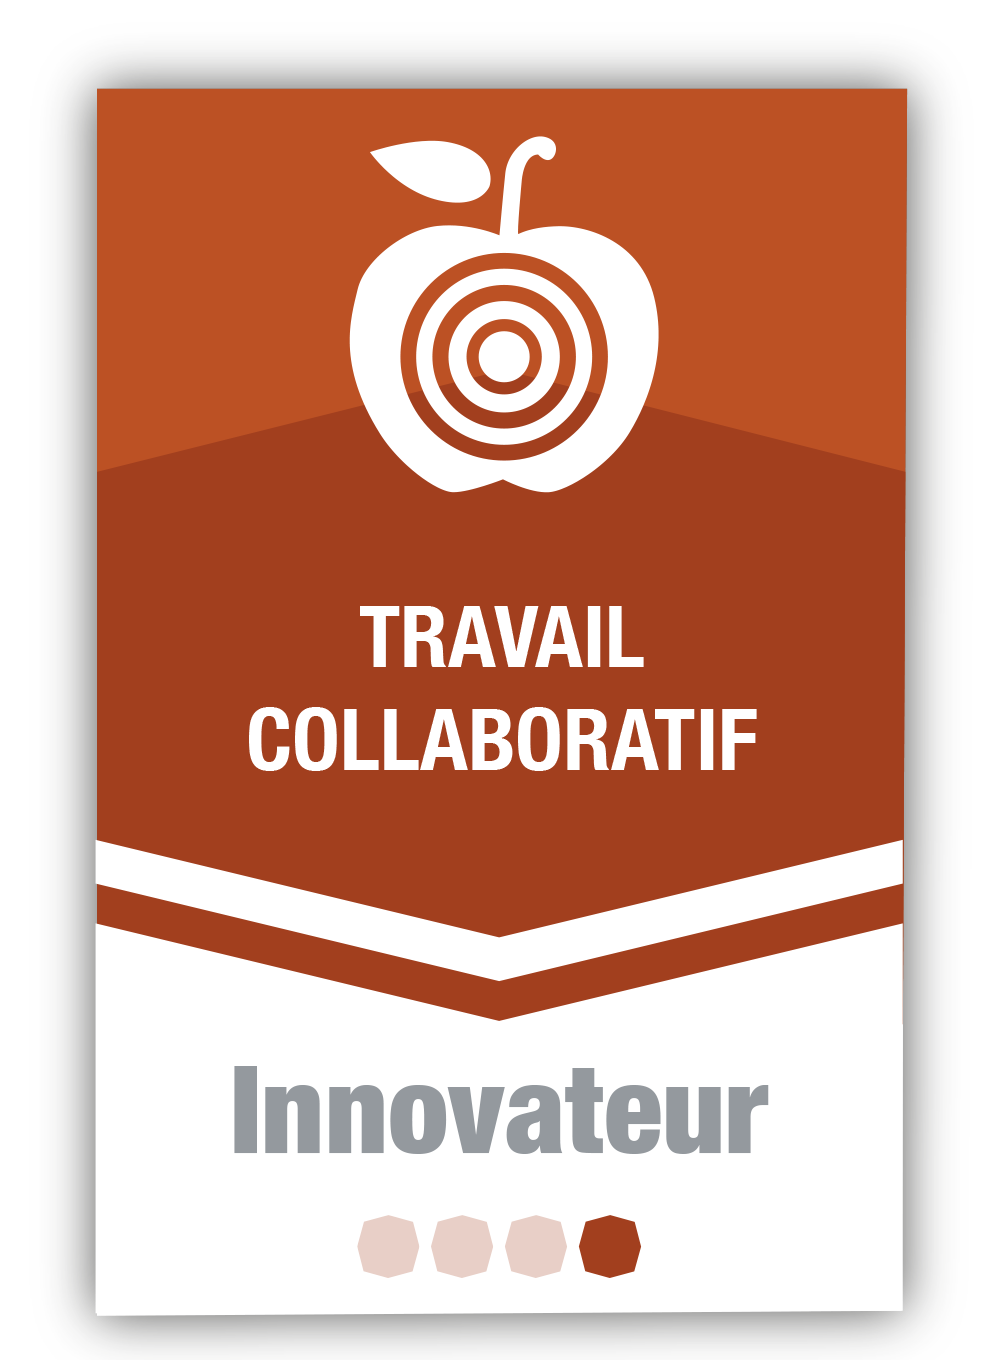 Travail collaboratif 4 - Innovateur